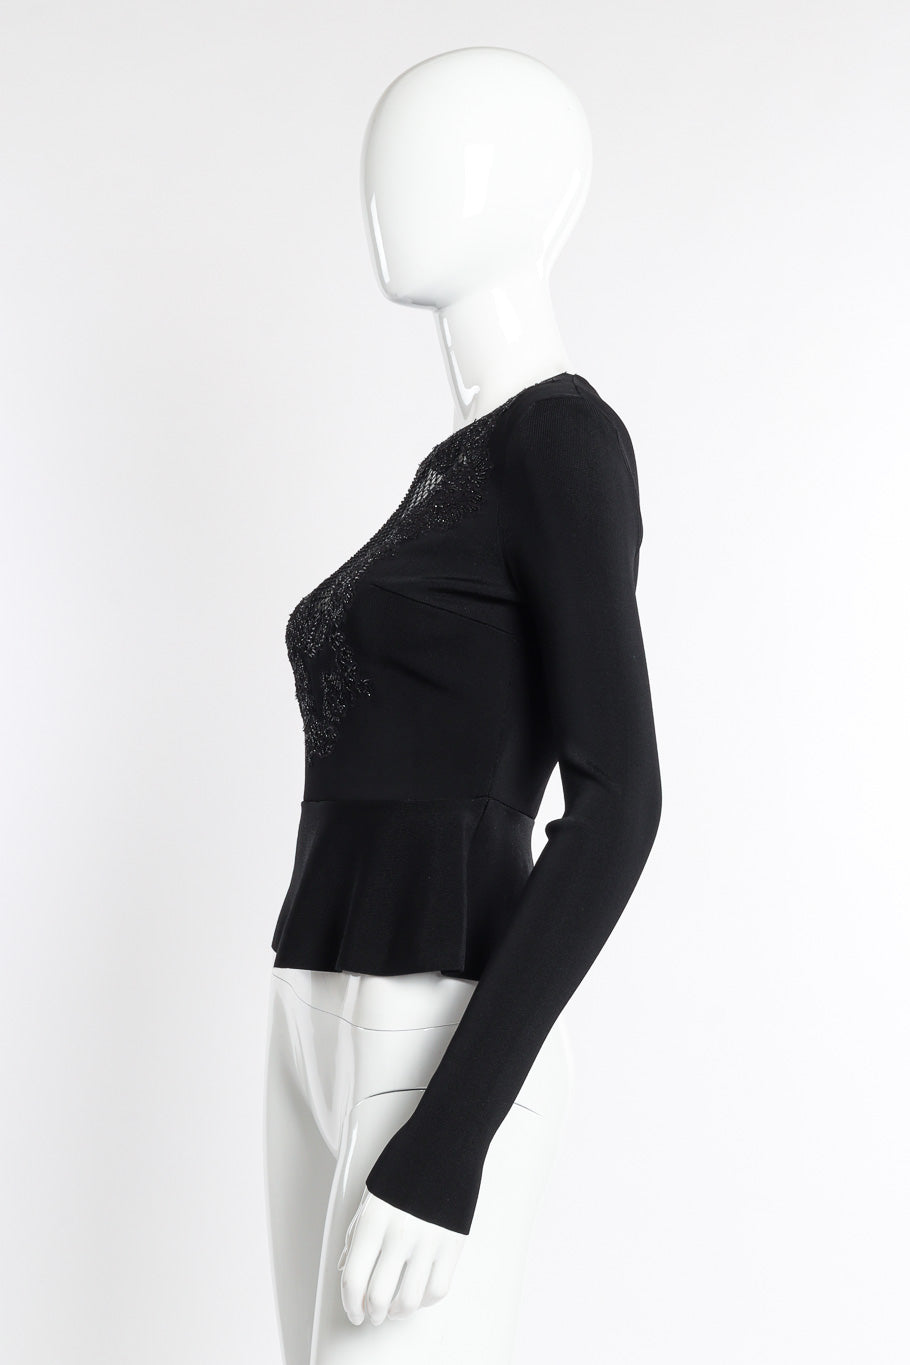 Valentino Beaded Fishnet Knit Top side on mannequin @recessla